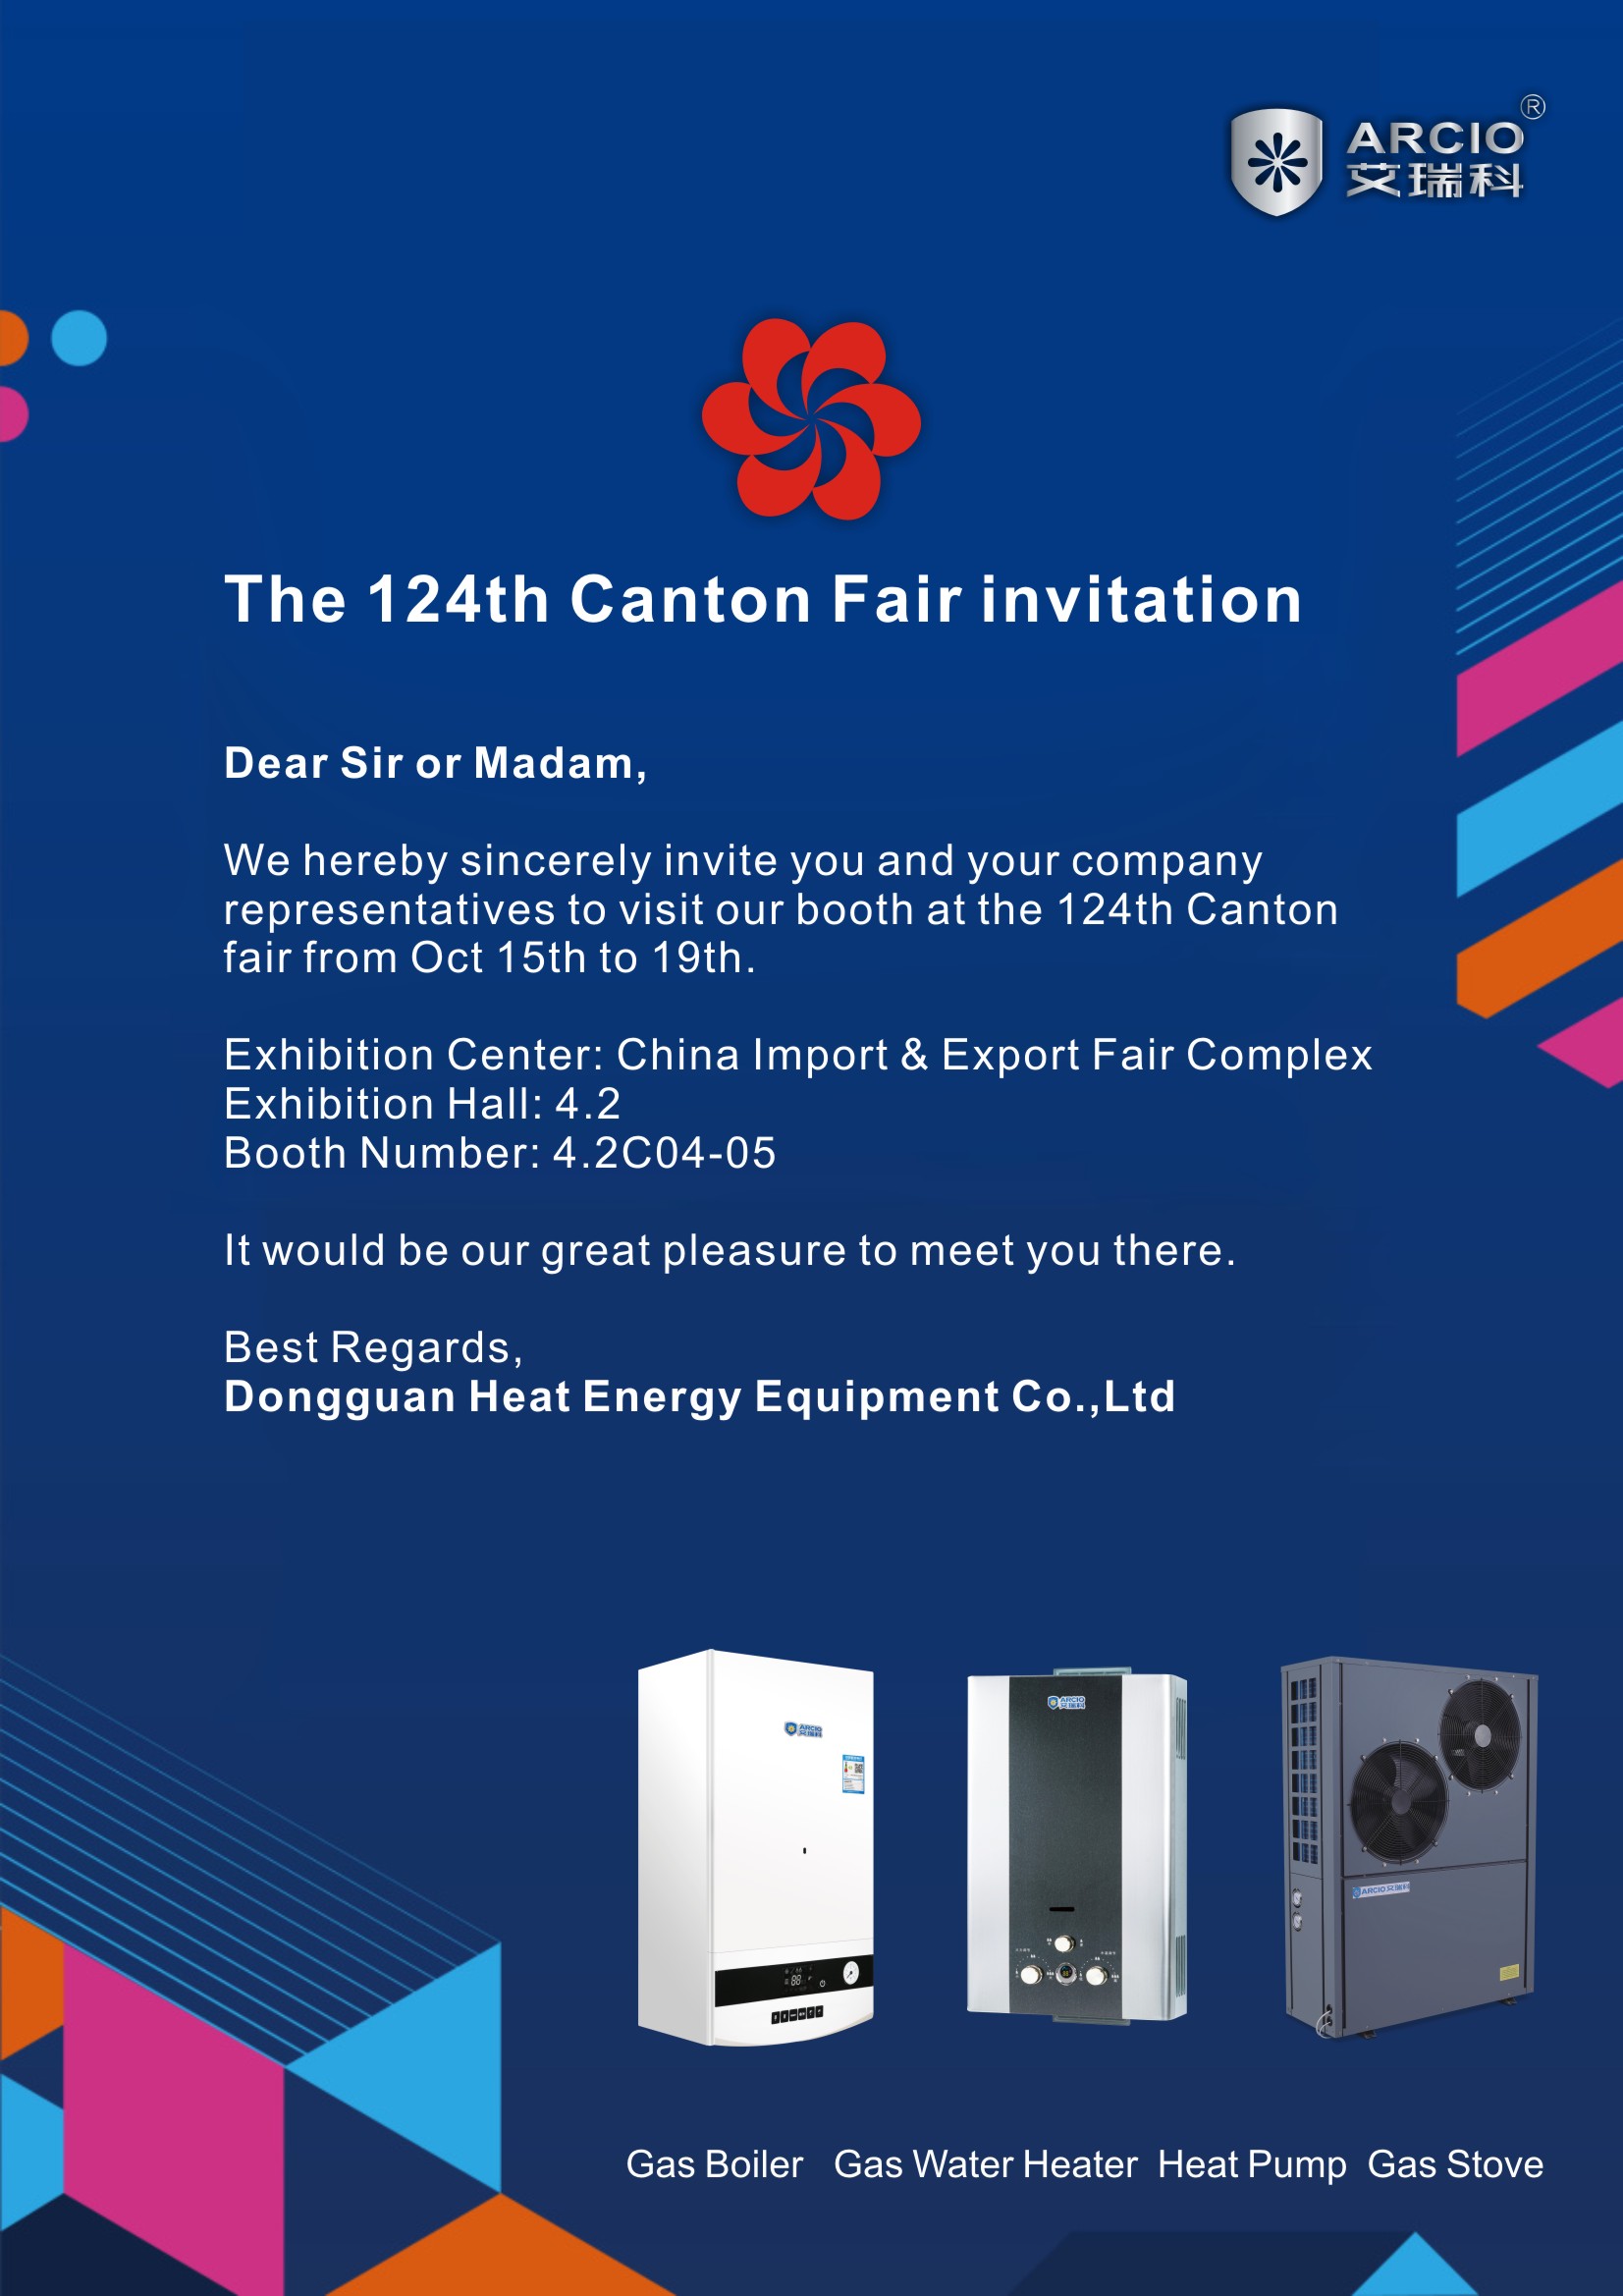 The 124th Canton Fair Invitation